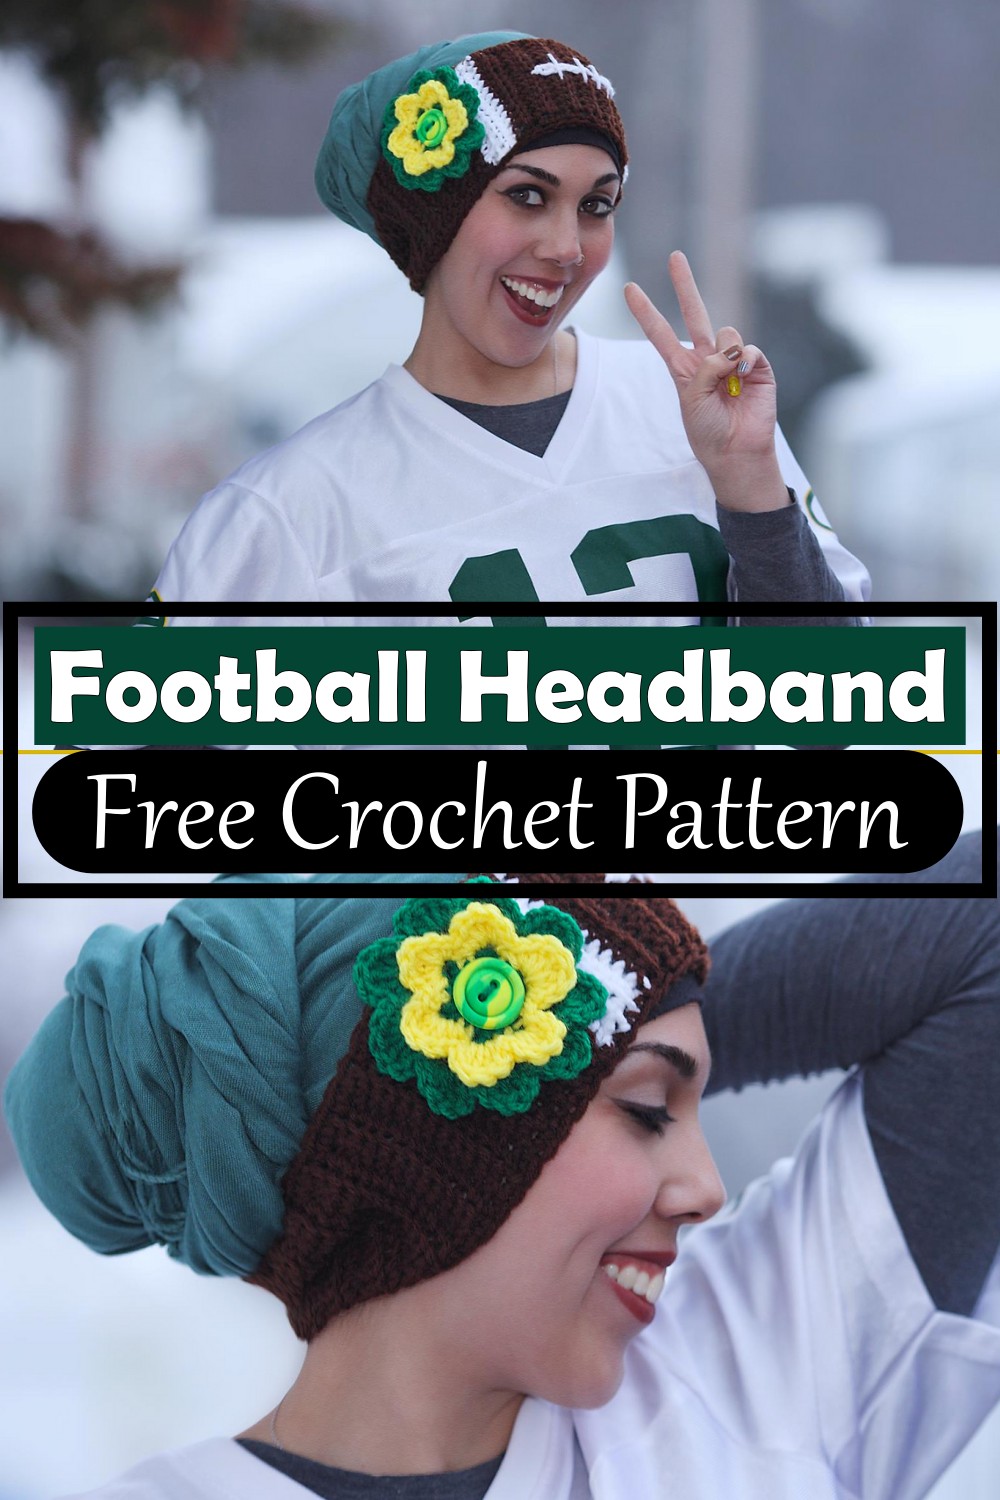 Football Headband